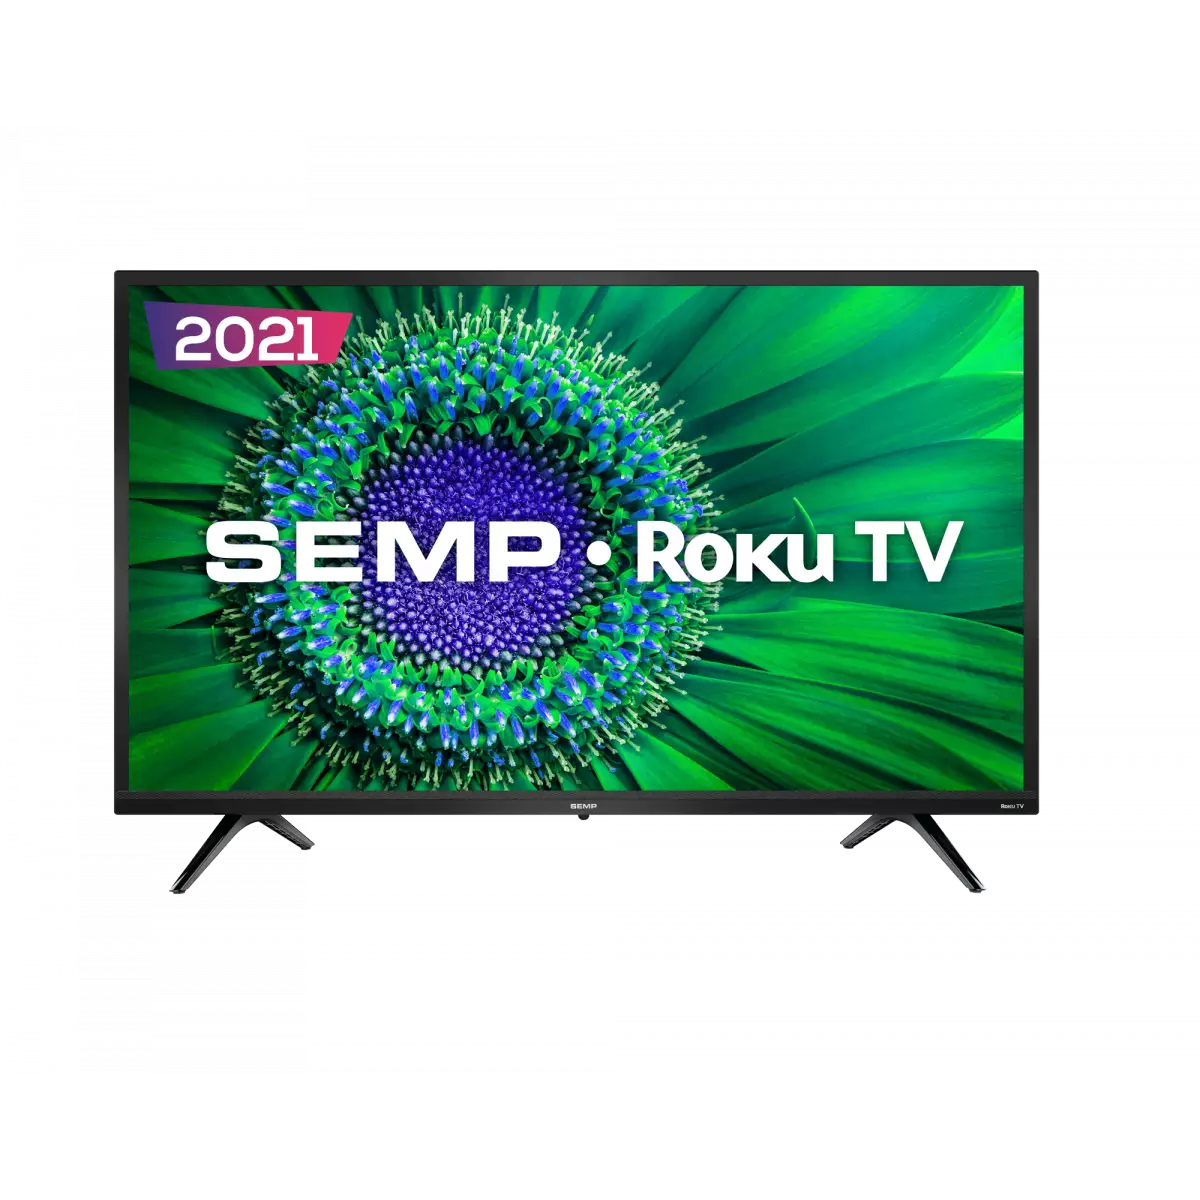 Smart Tv 43" Semp Roku LED Full HD R5500 Wi-Fi 3 HDMI Dual Band 1 USB DTV Decoder